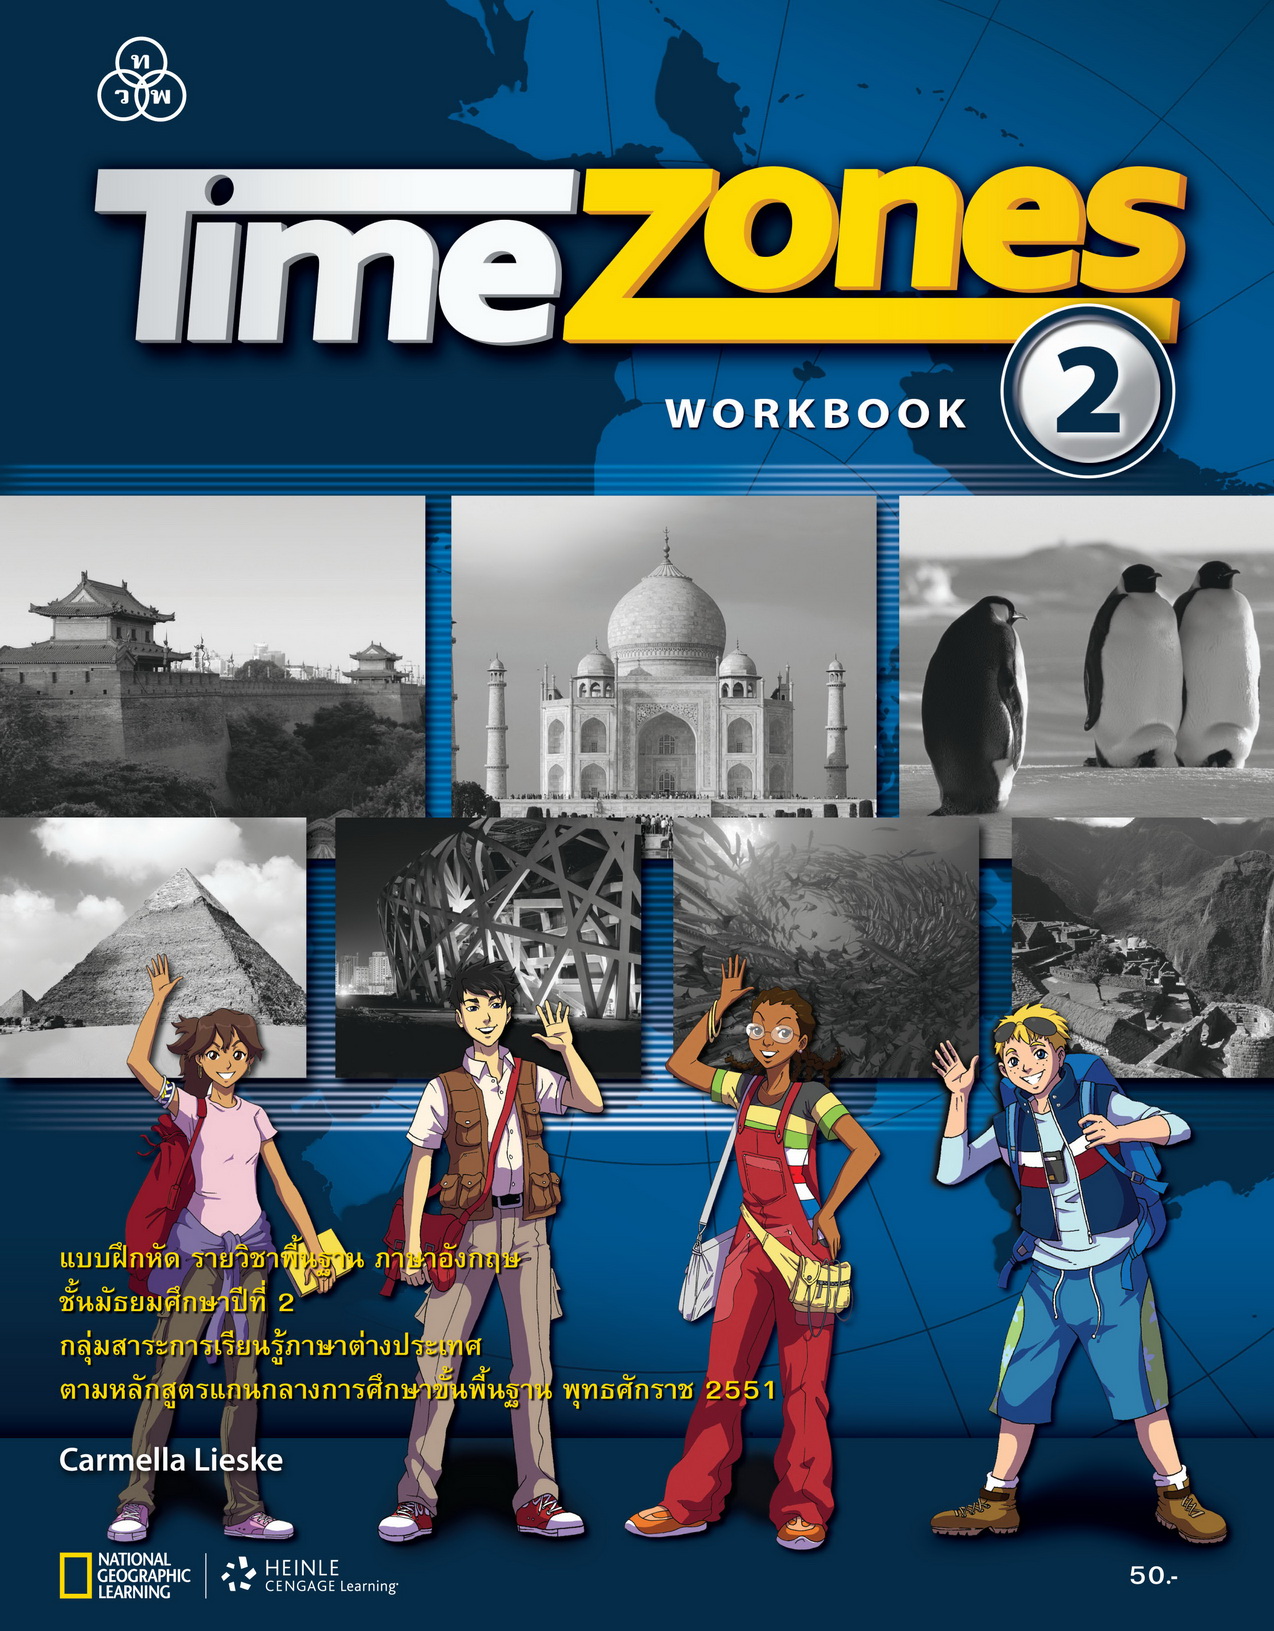 TimeZones Workbook 2